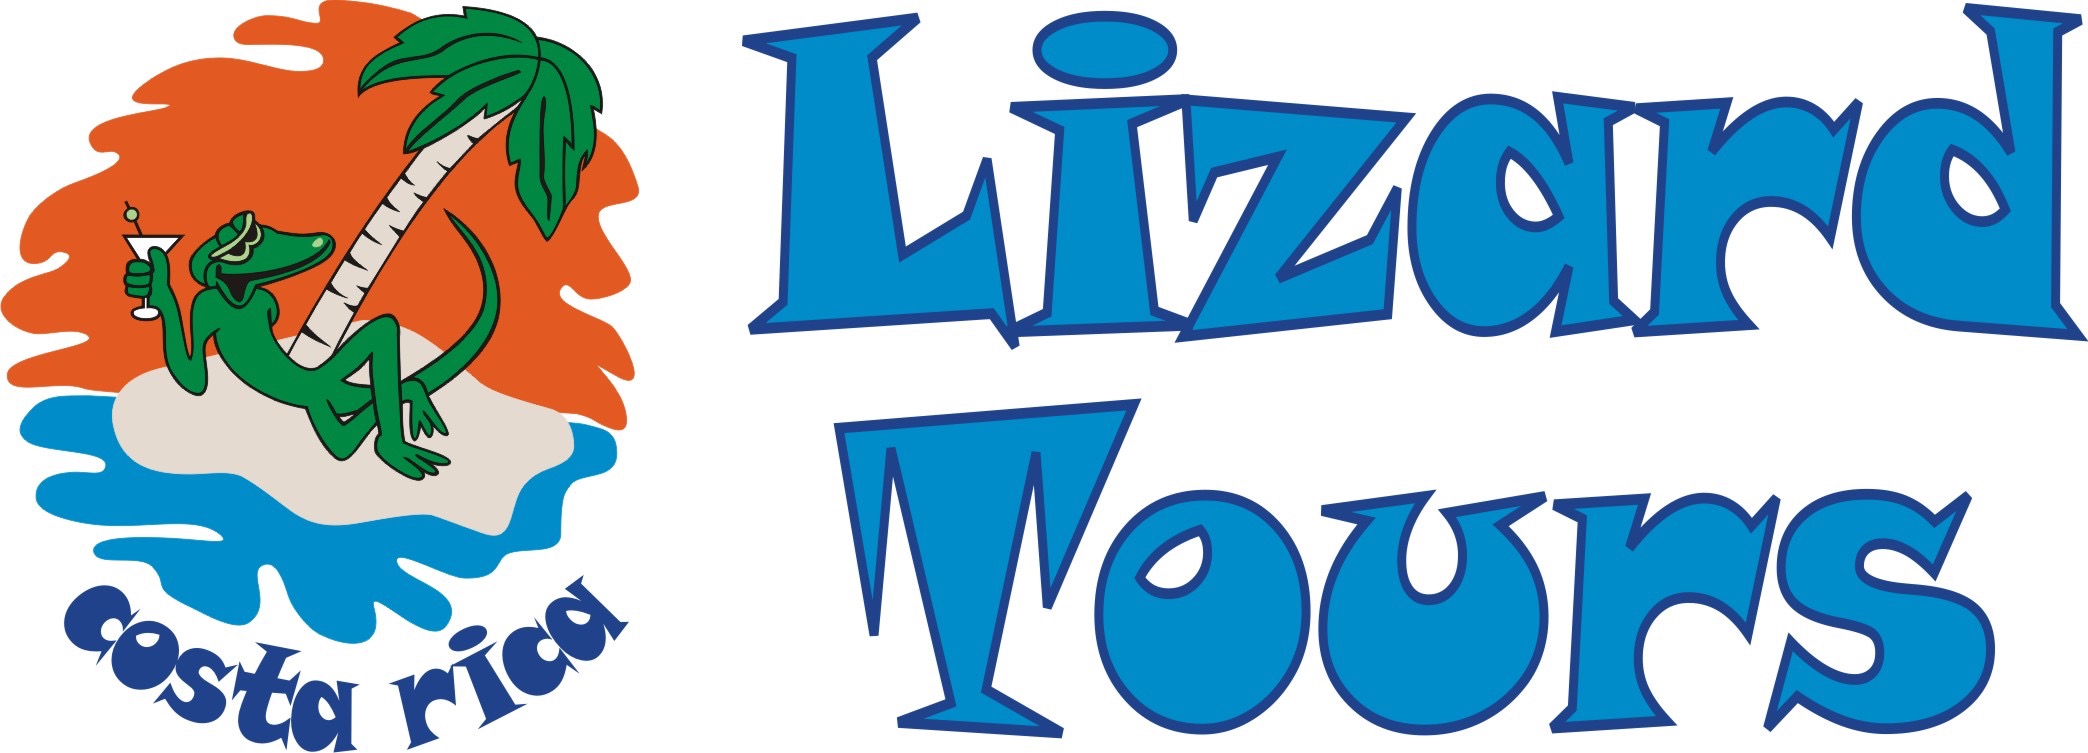 lizard-tour-logo